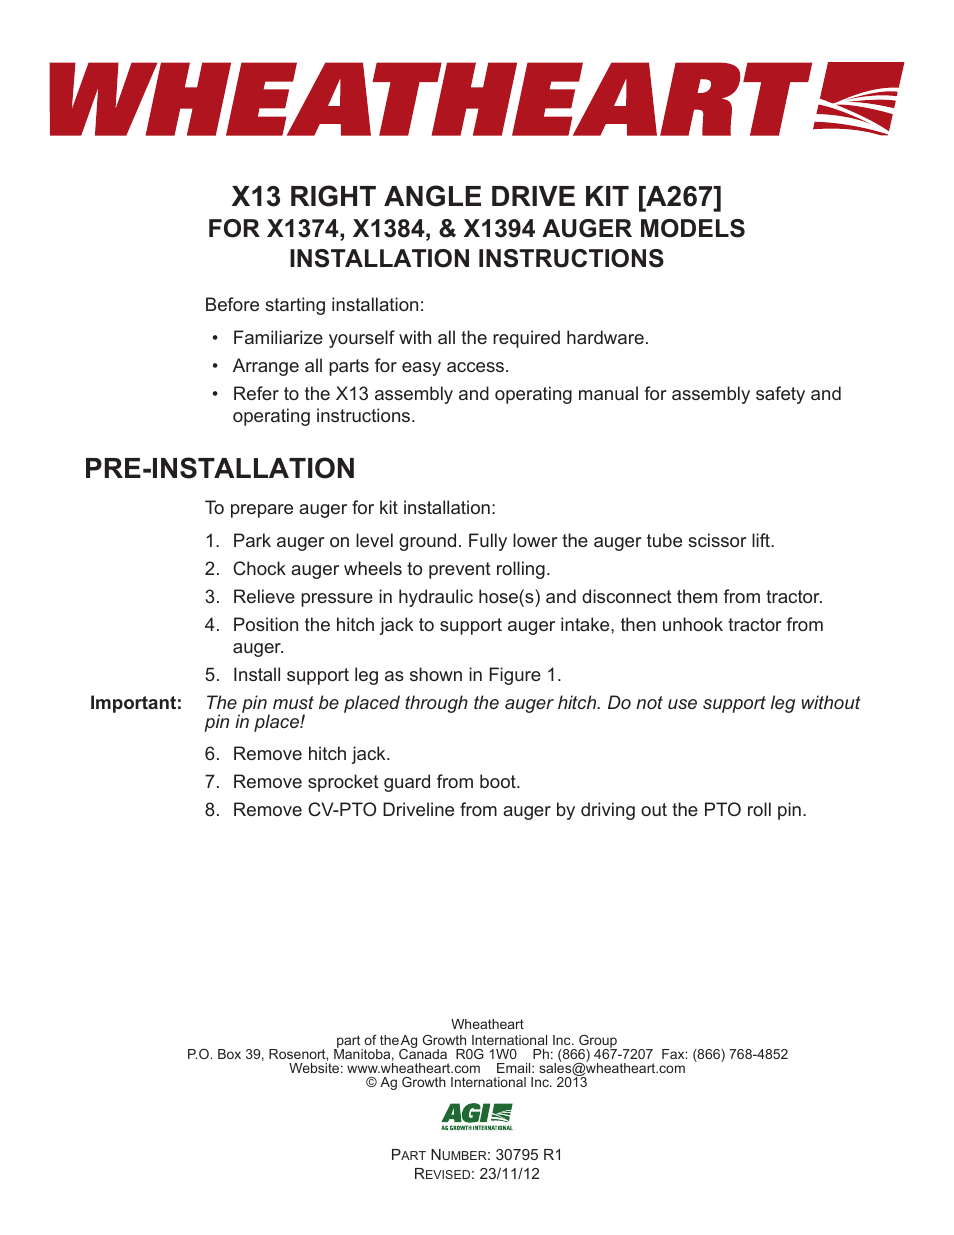 X13 Right Angle Drive Kit